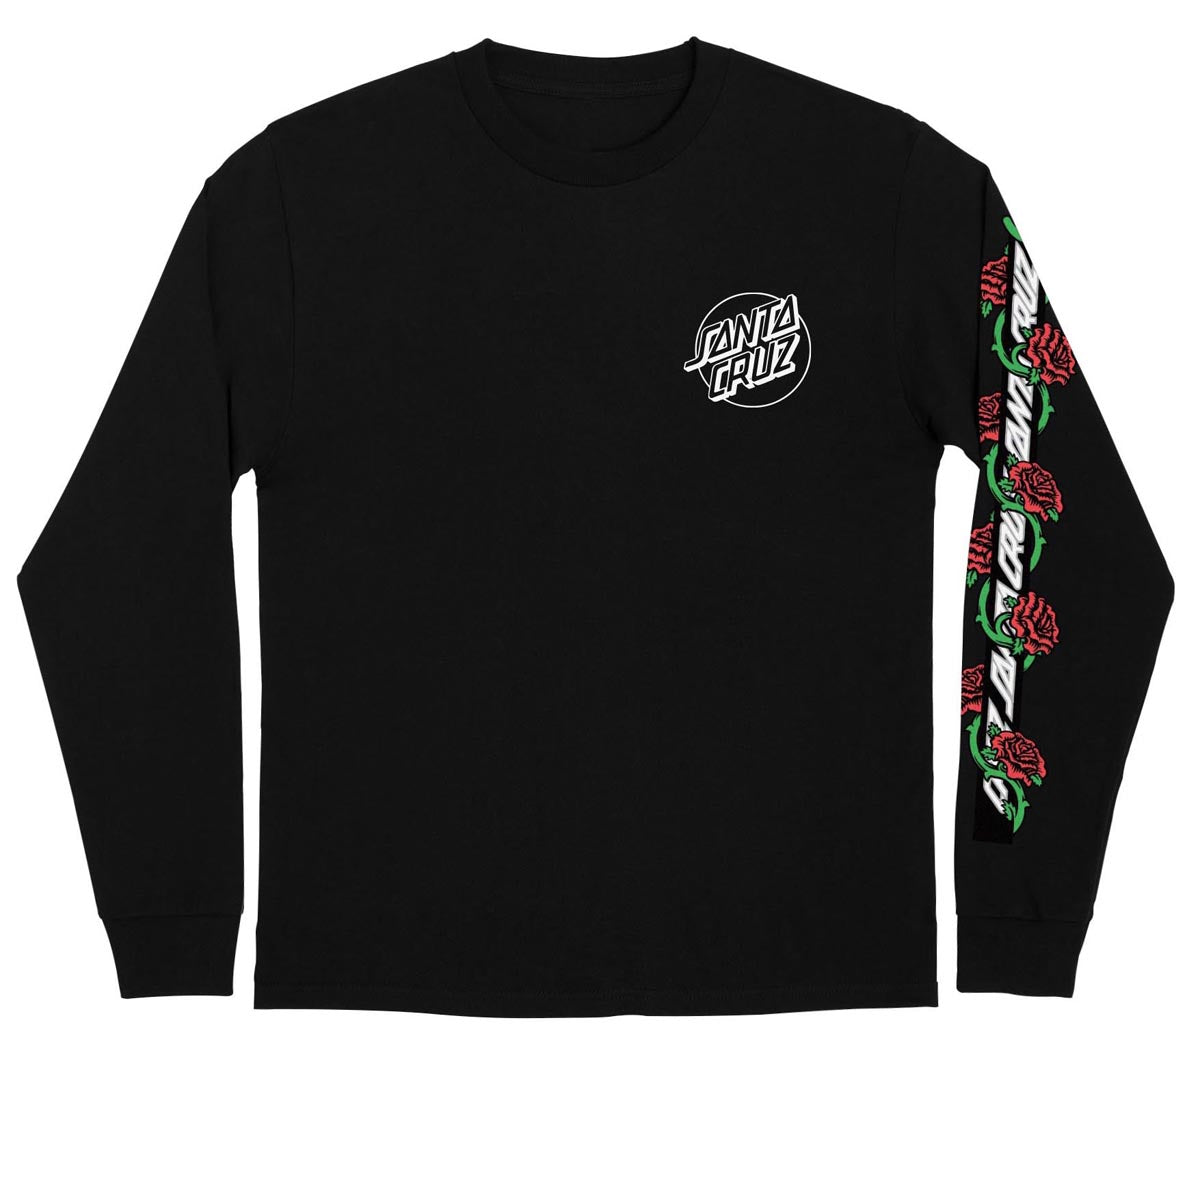 Santa Cruz Dressen Roses Vine Opus Long Sleeve T-Shirt - Black image 1